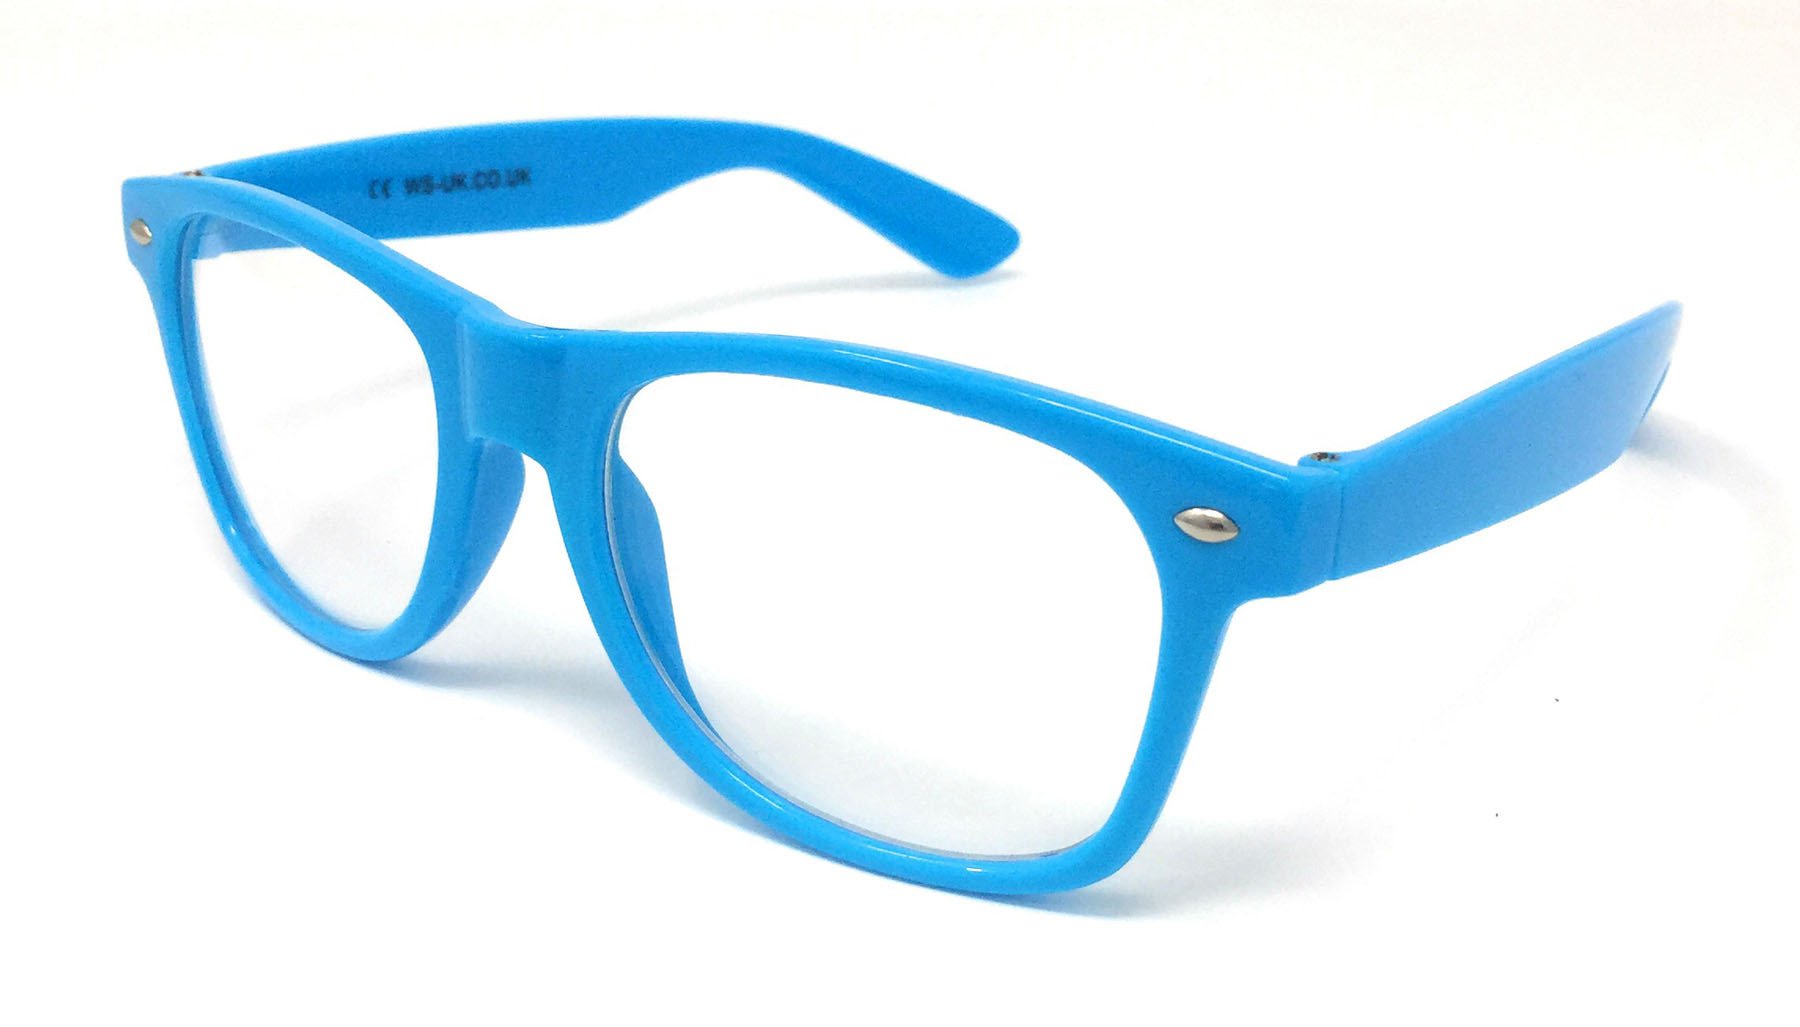 Wholesale Classic Clear Lens Glasses - Sky Blue Frame